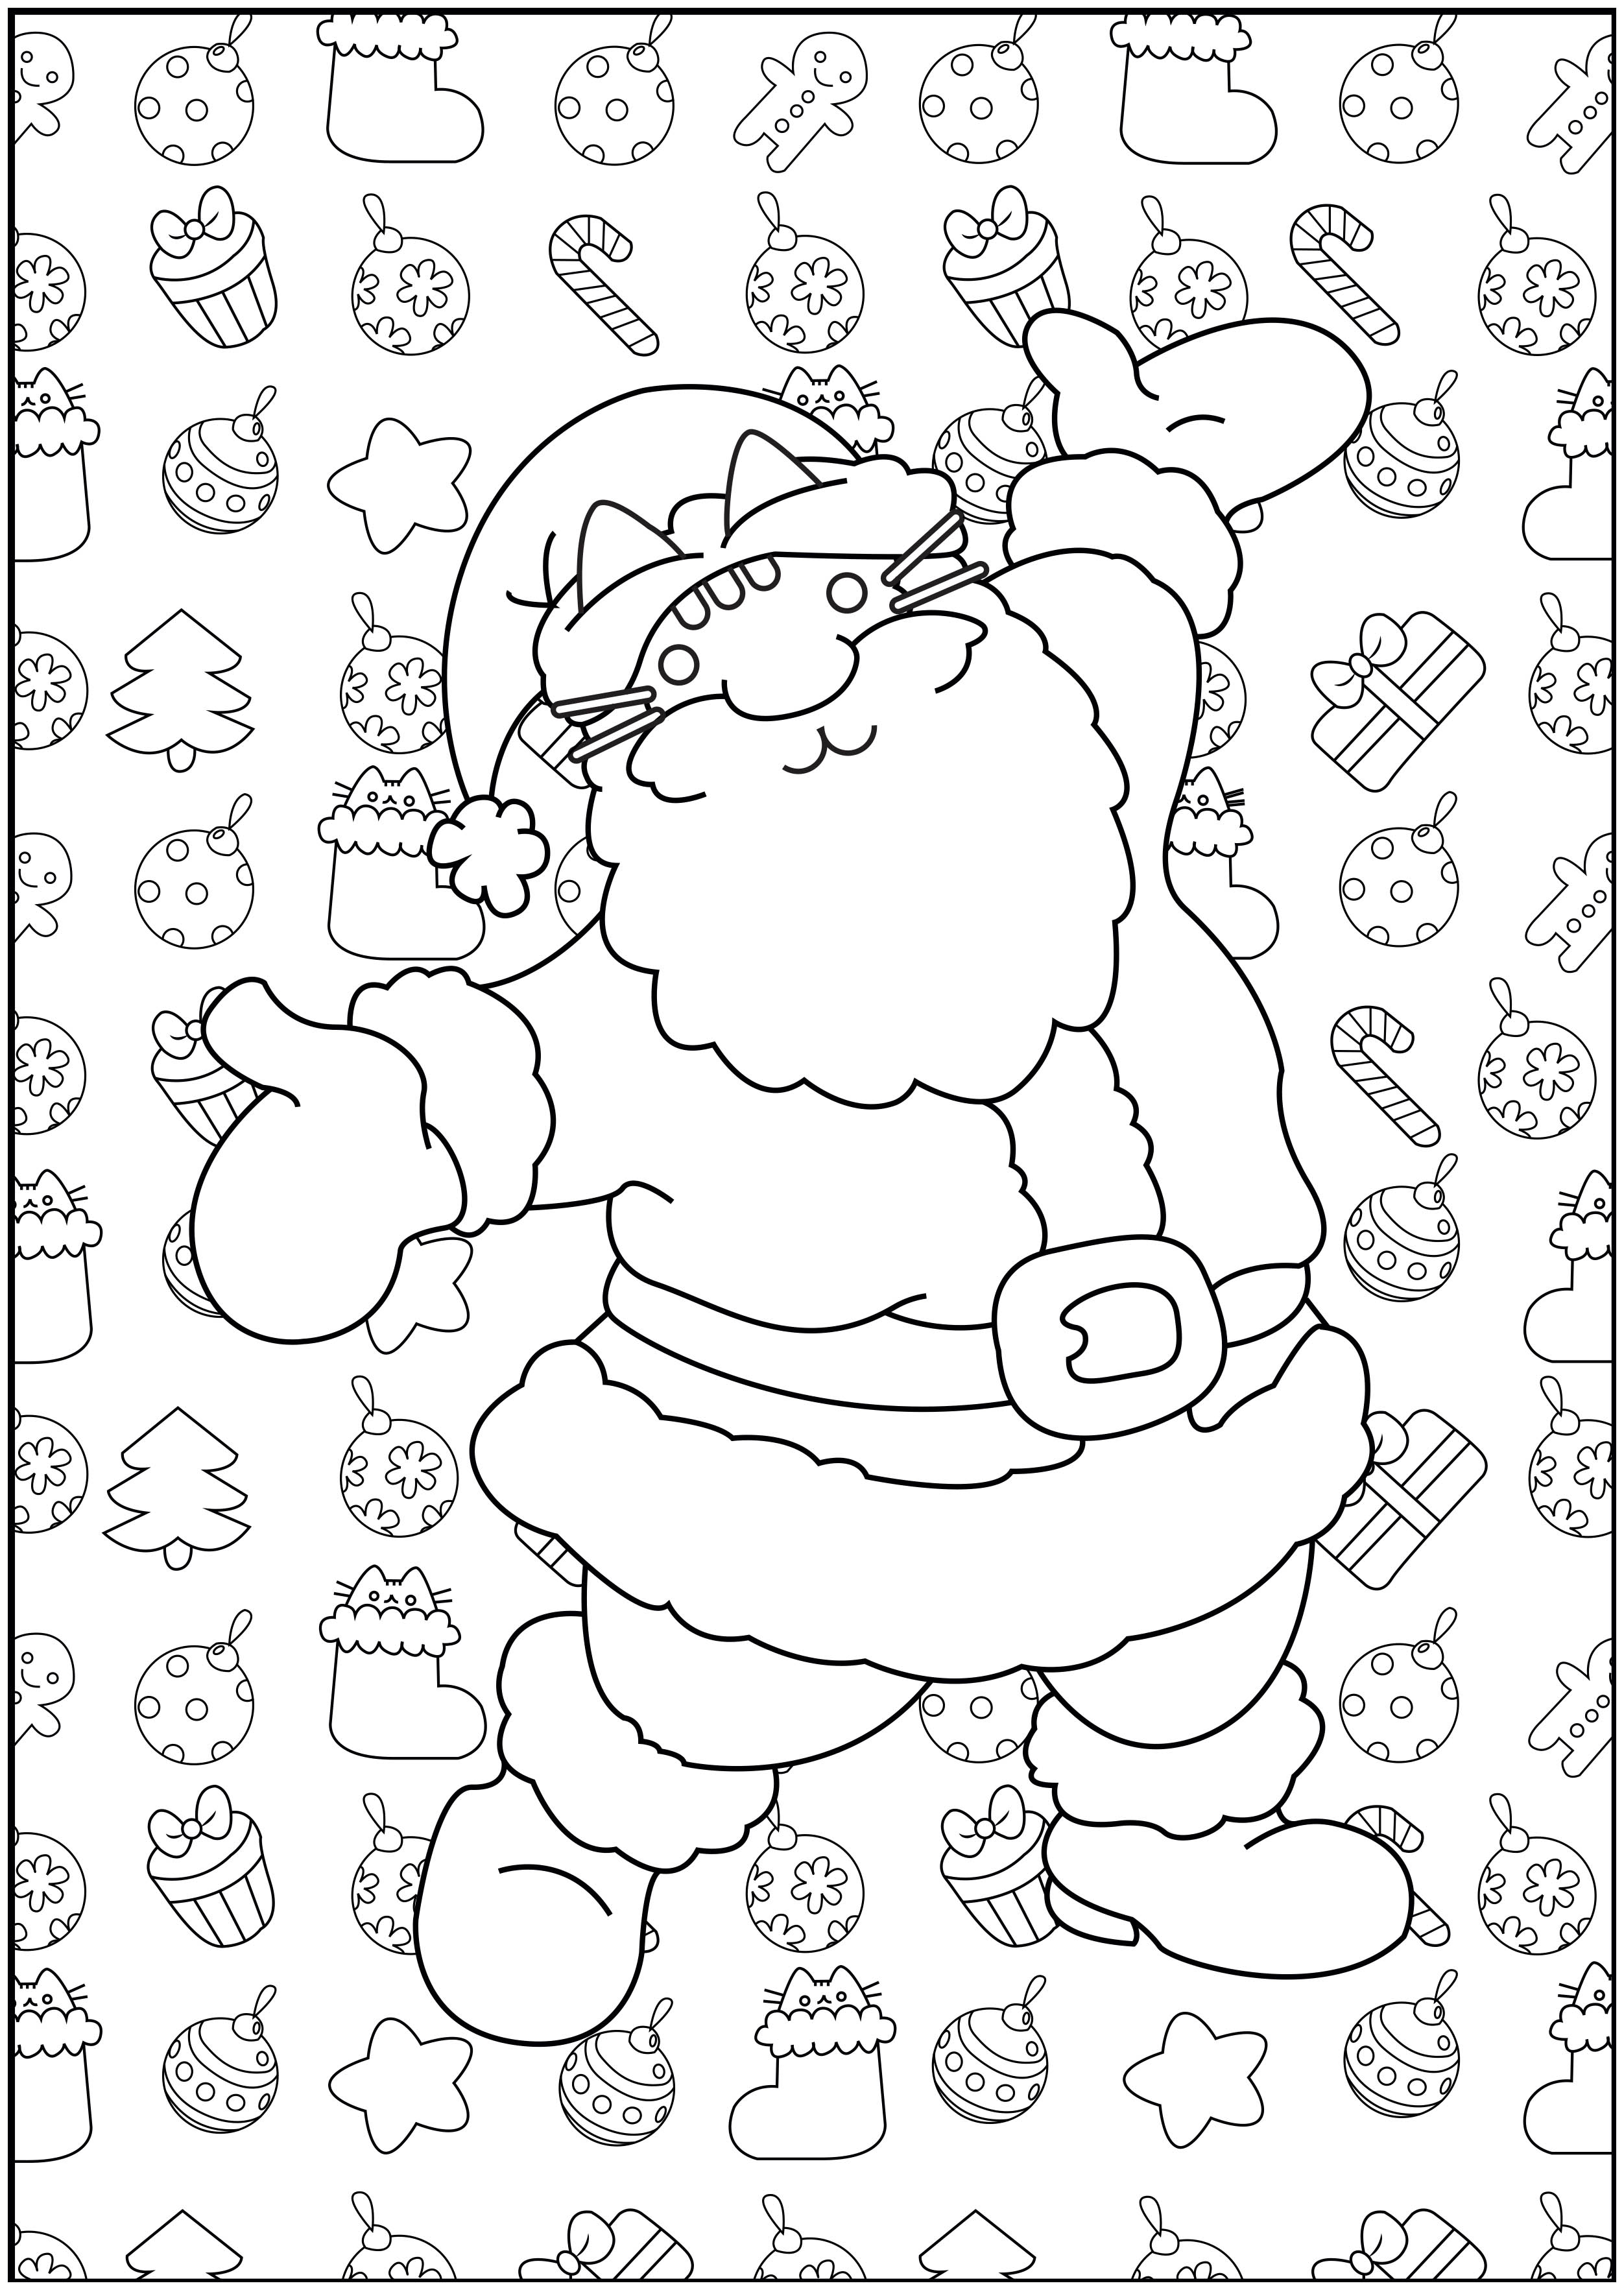 Pusheen de noel - Christmas Adult Coloring Pages